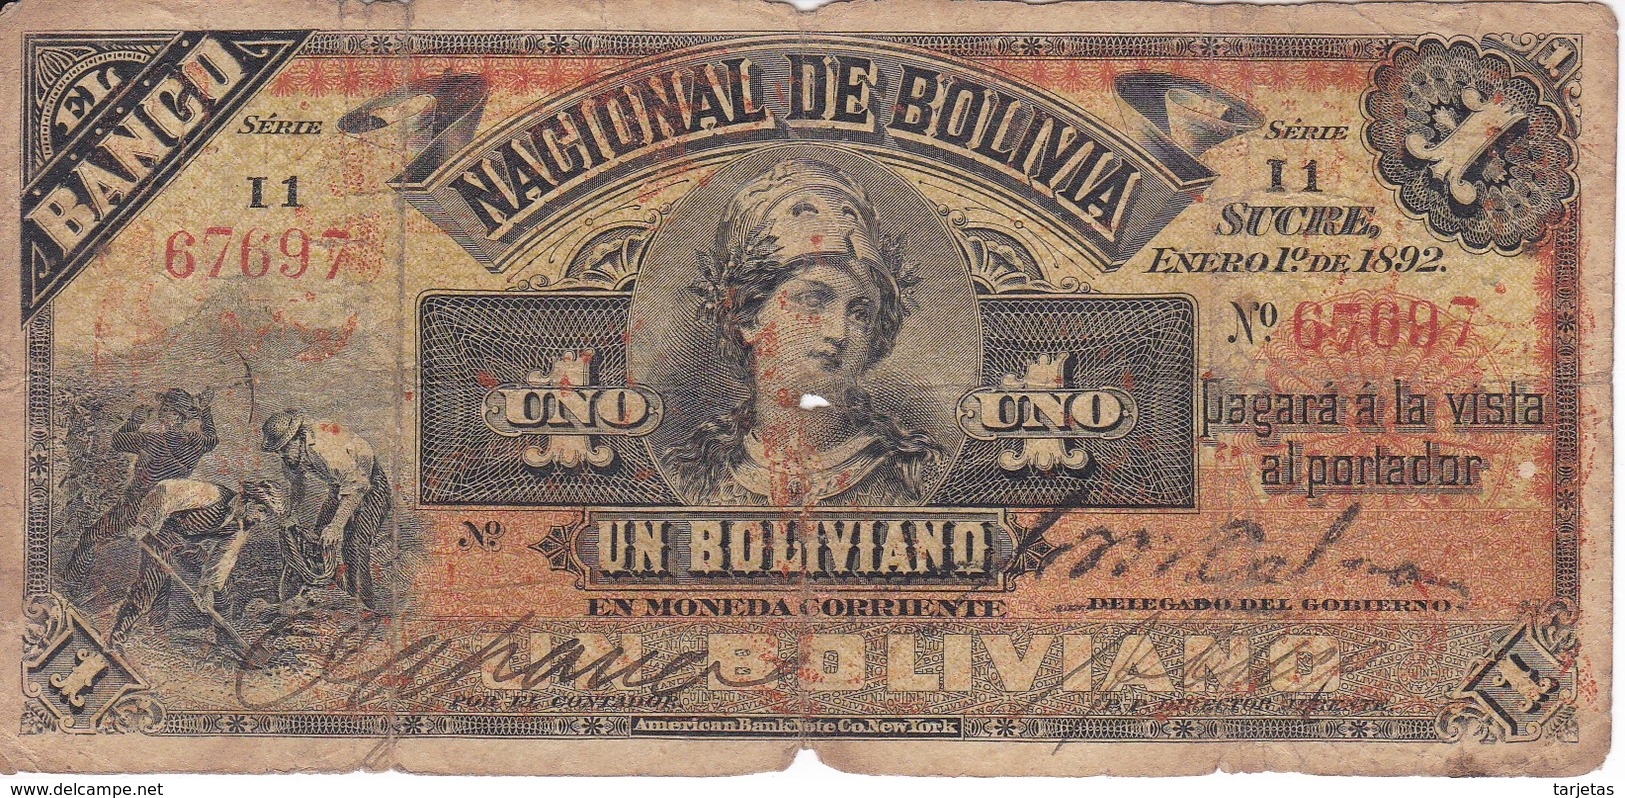 BILLETE DE BOLIVIA DE 1 BOLIVIANO DEL AÑO 1892 SERIE I1 (BANKNOTE) - Bolivia